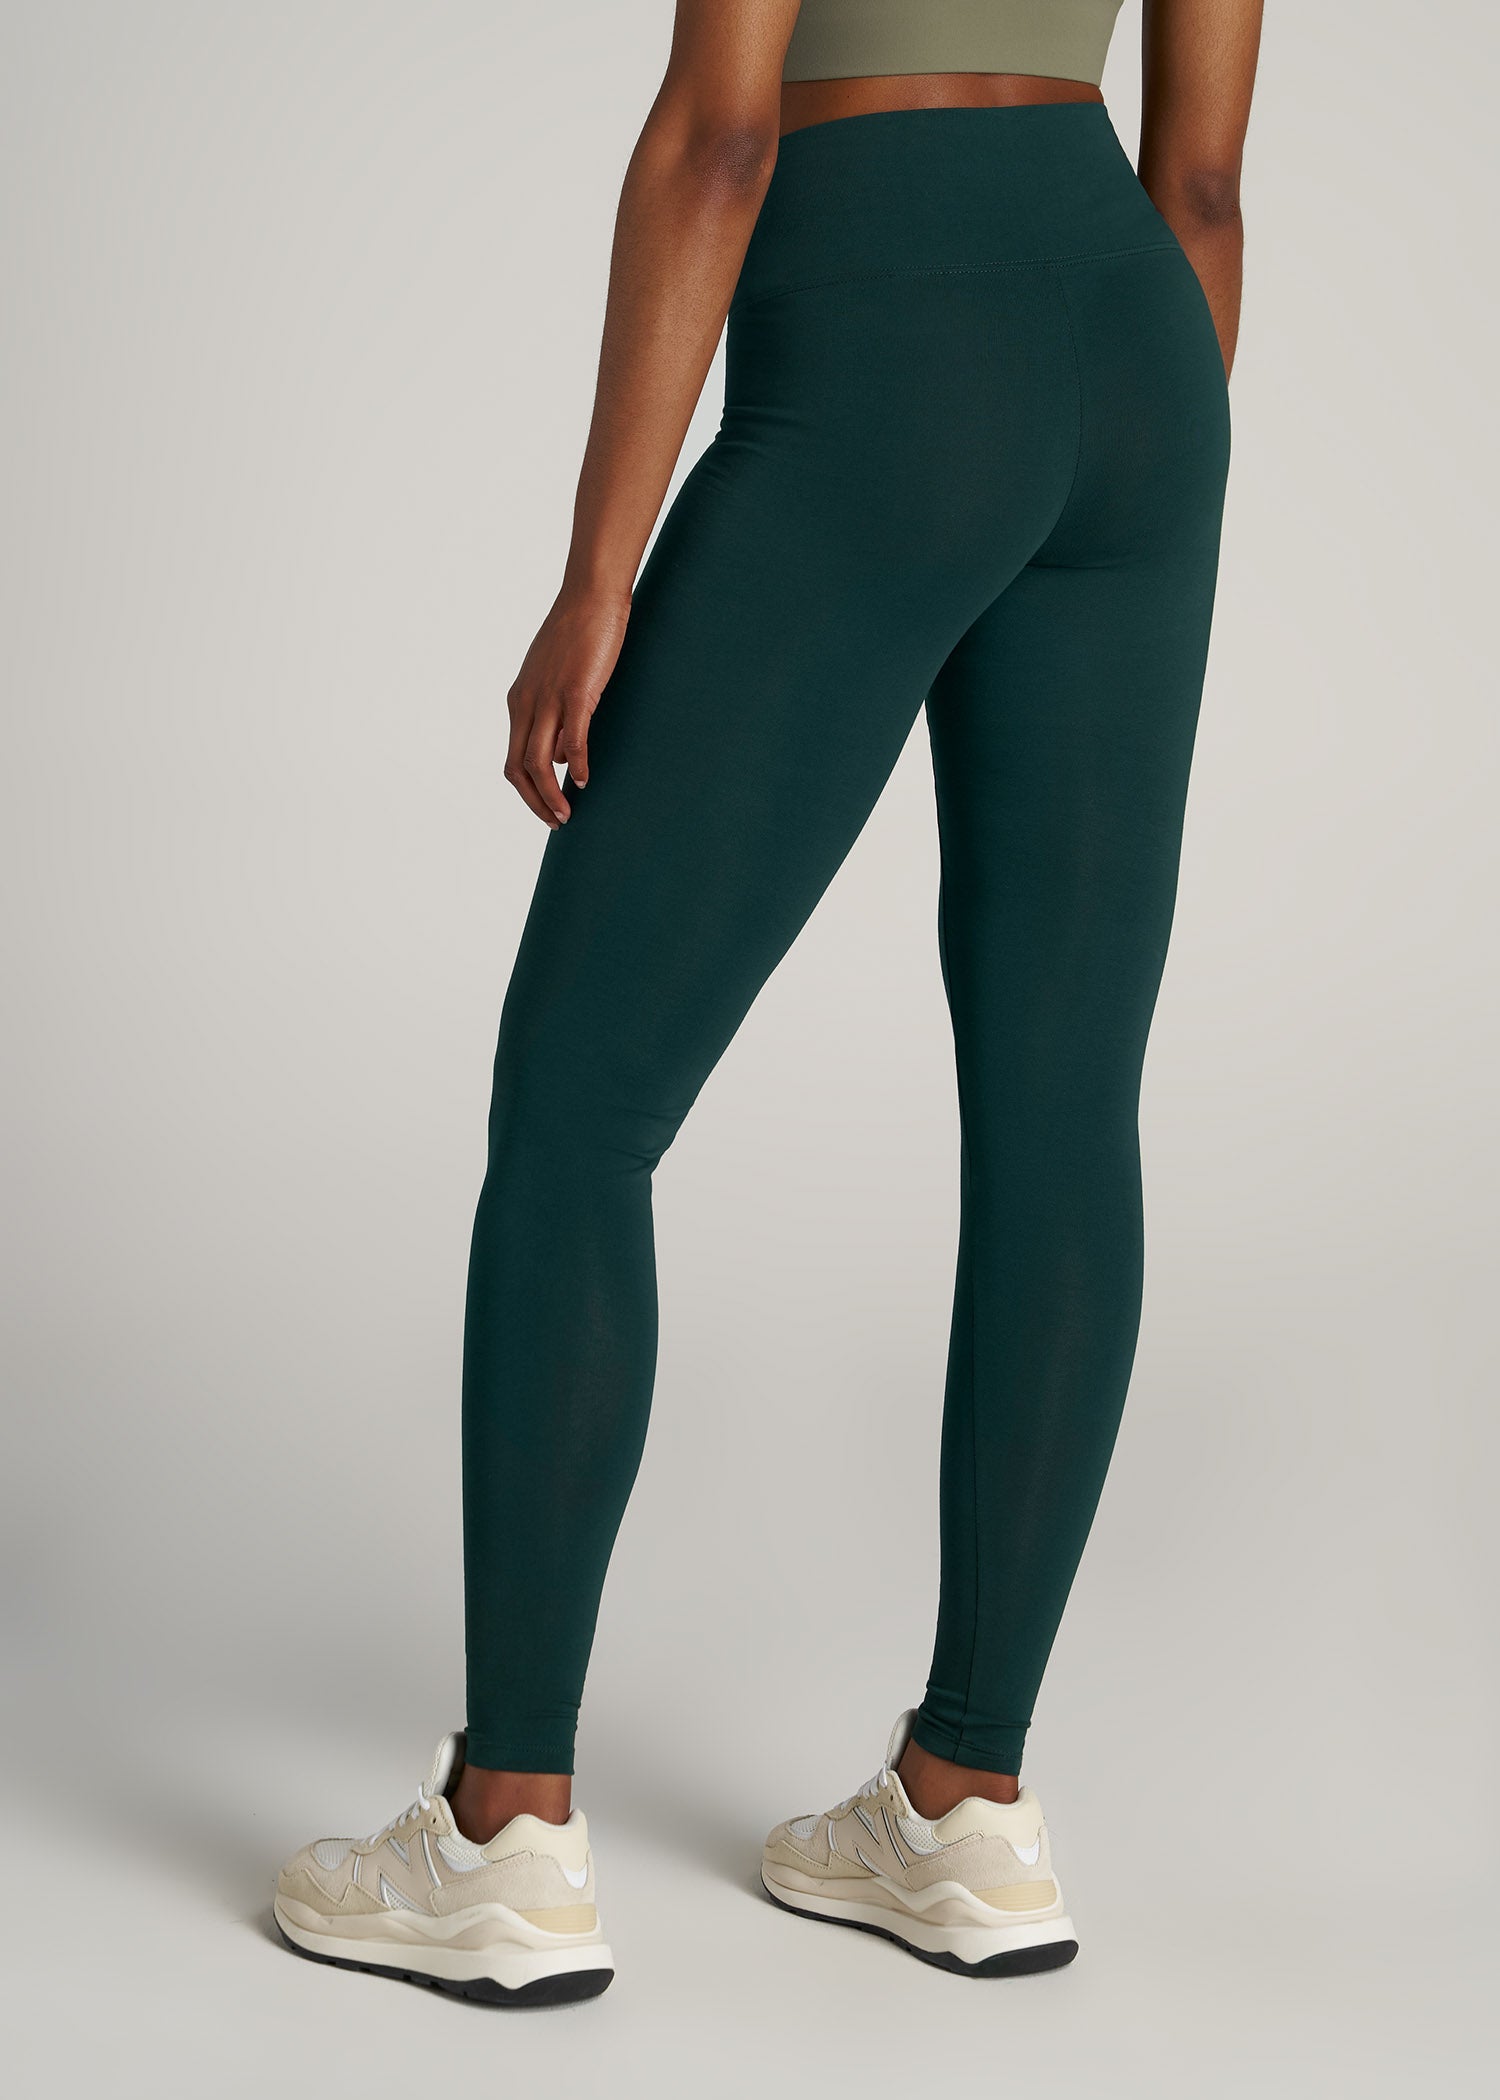 Women's Tall Cotton Leggings Emerald American Tall, 60% OFF